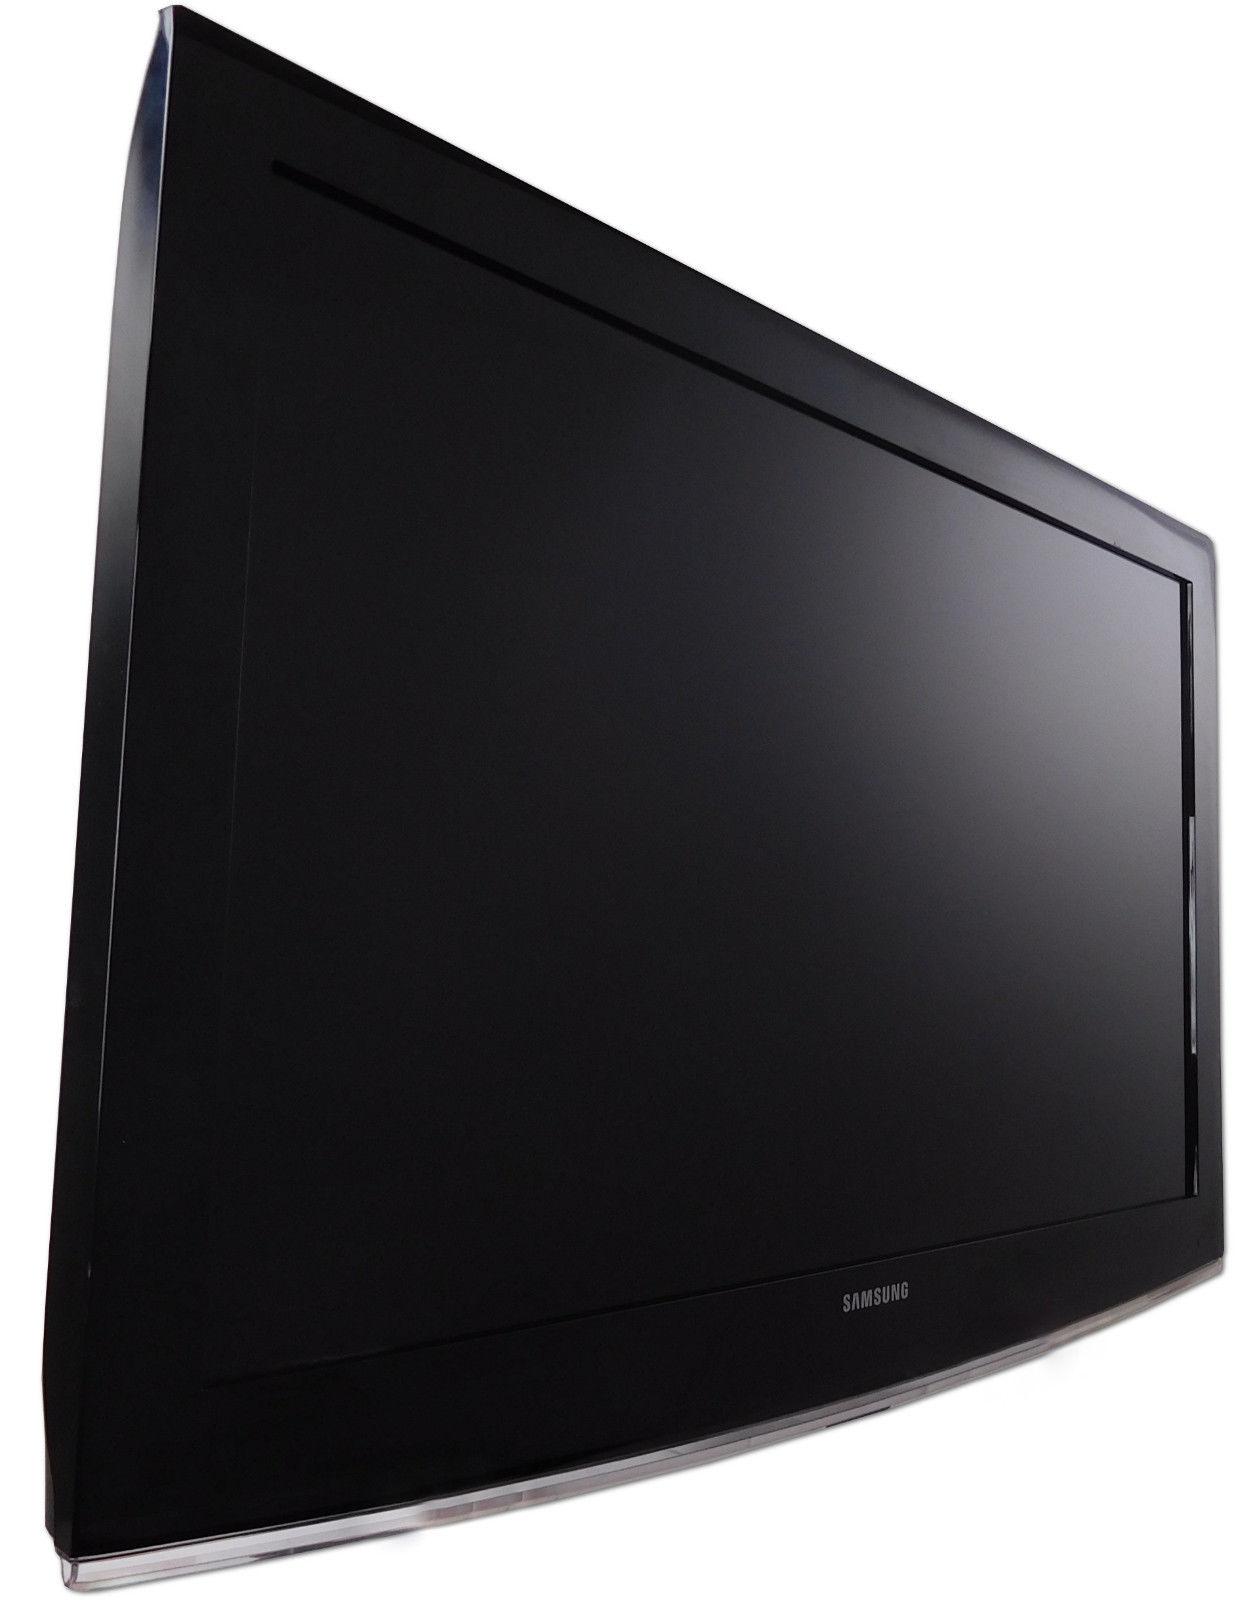 SAMSUNG 101,6 cm (40 Zoll) Fernseher Digital LCD TV FullHD DVB-C DVB-T USB HDMI 